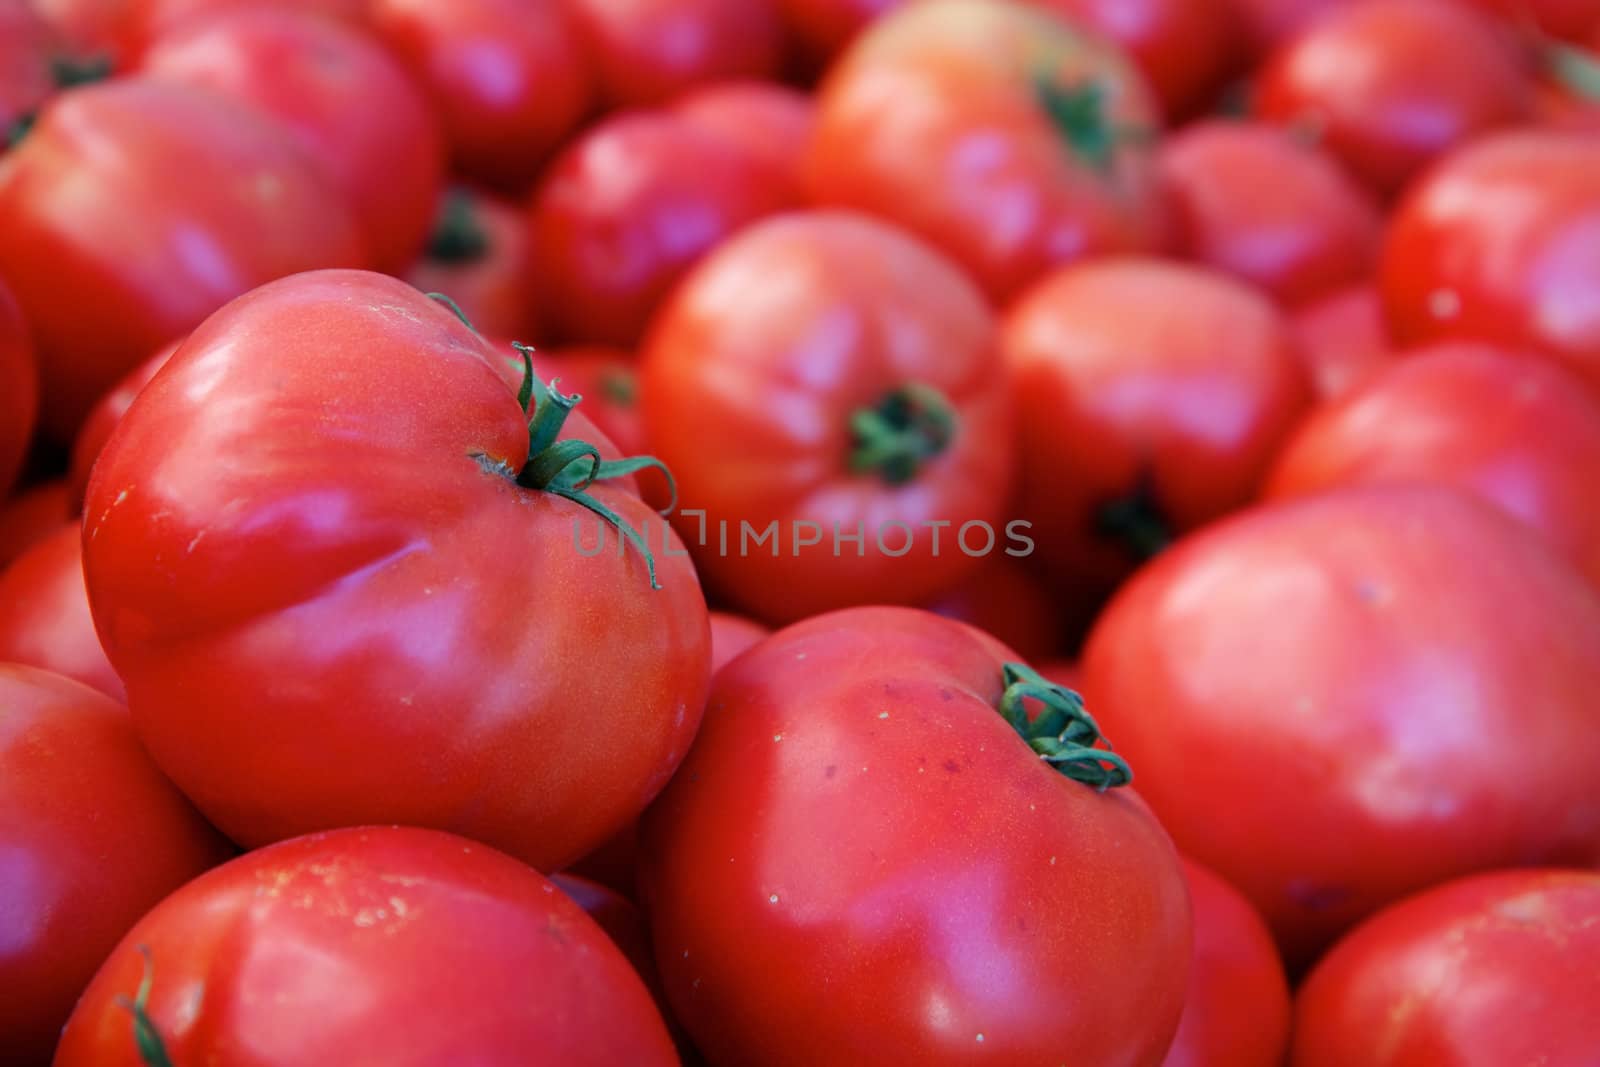 Pile of tomatoes single focus by bobkeenan